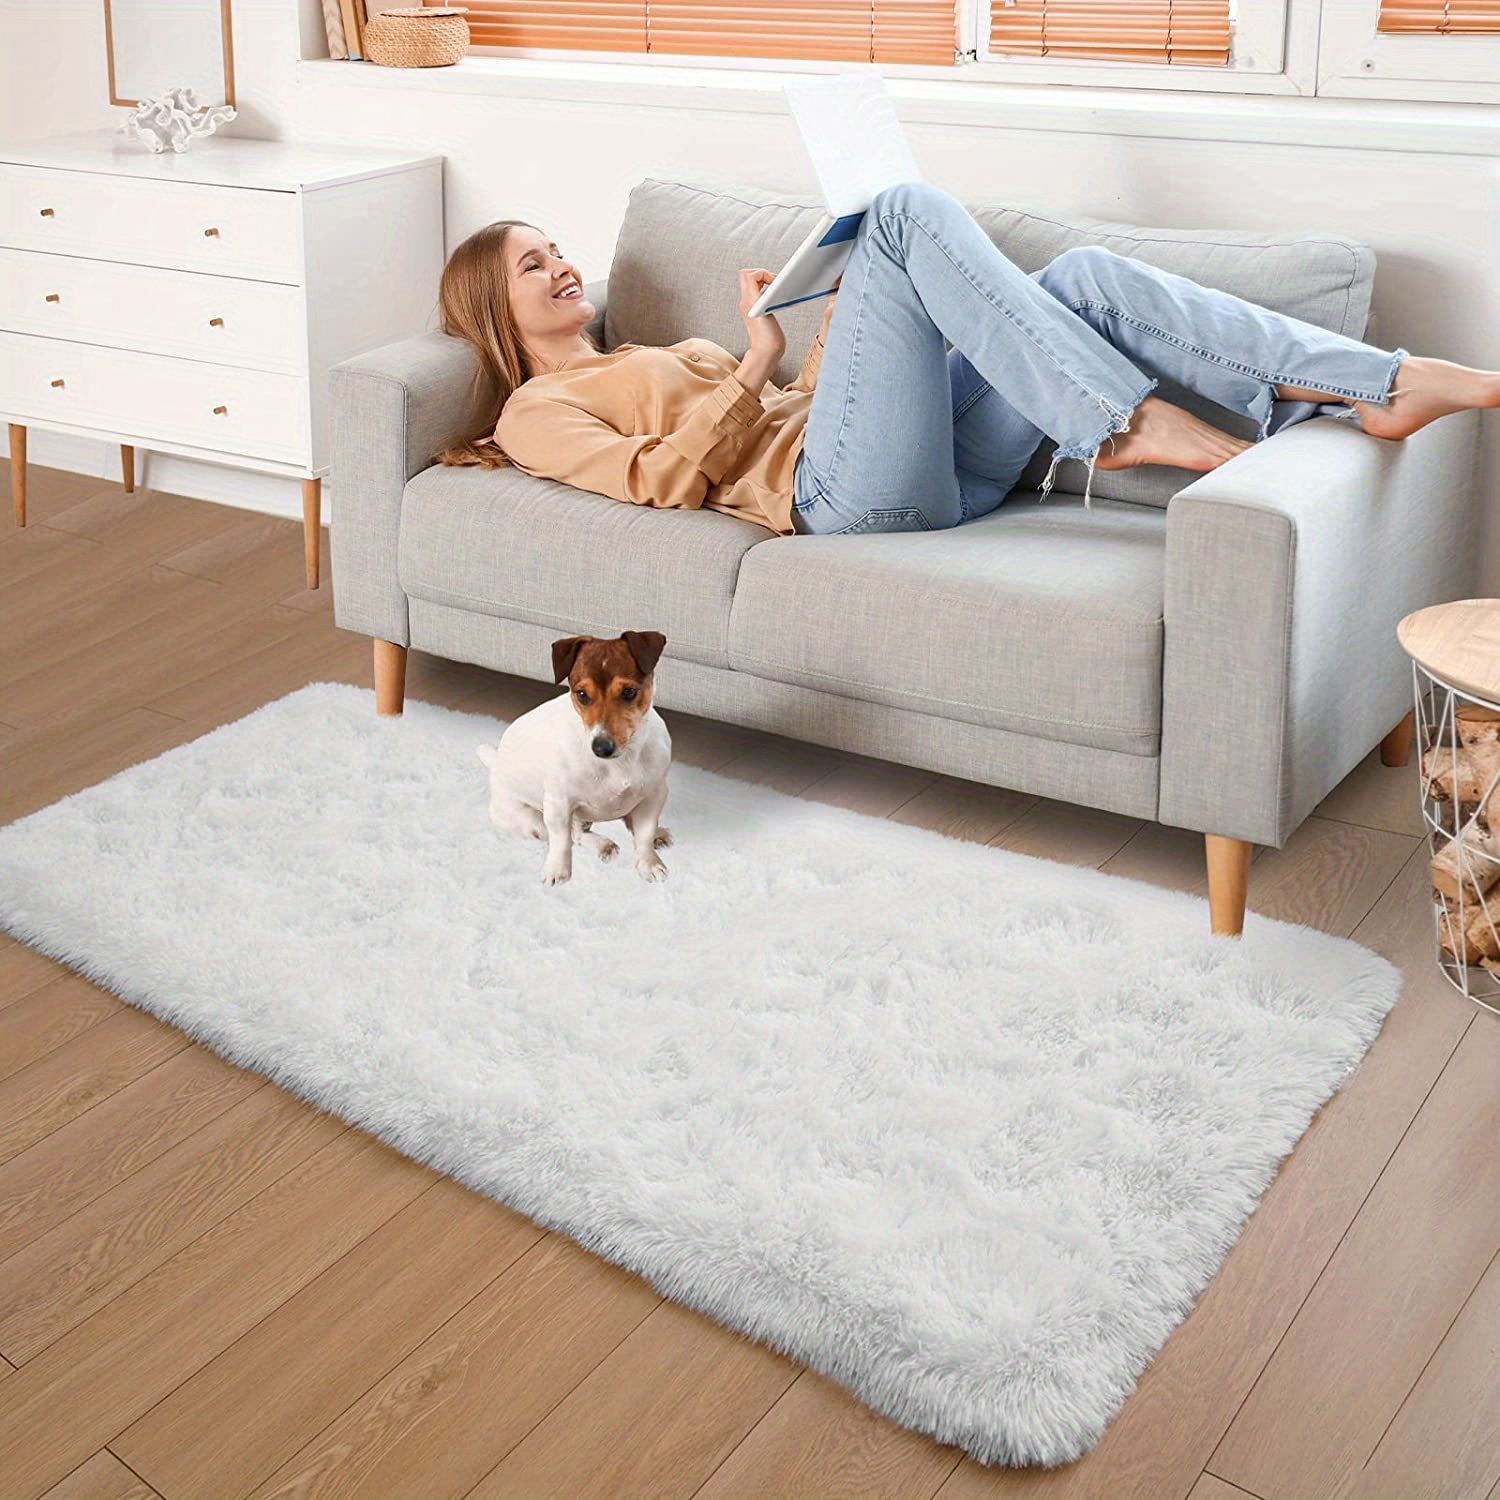 12x18 ft Extra Large Indoor Rug Modern Fluffy Area Rug Soft Plush Throw  Carpet Living Room Floor Cover Bedroom Floor Carpet Non-Slip Non-Shedding  Home